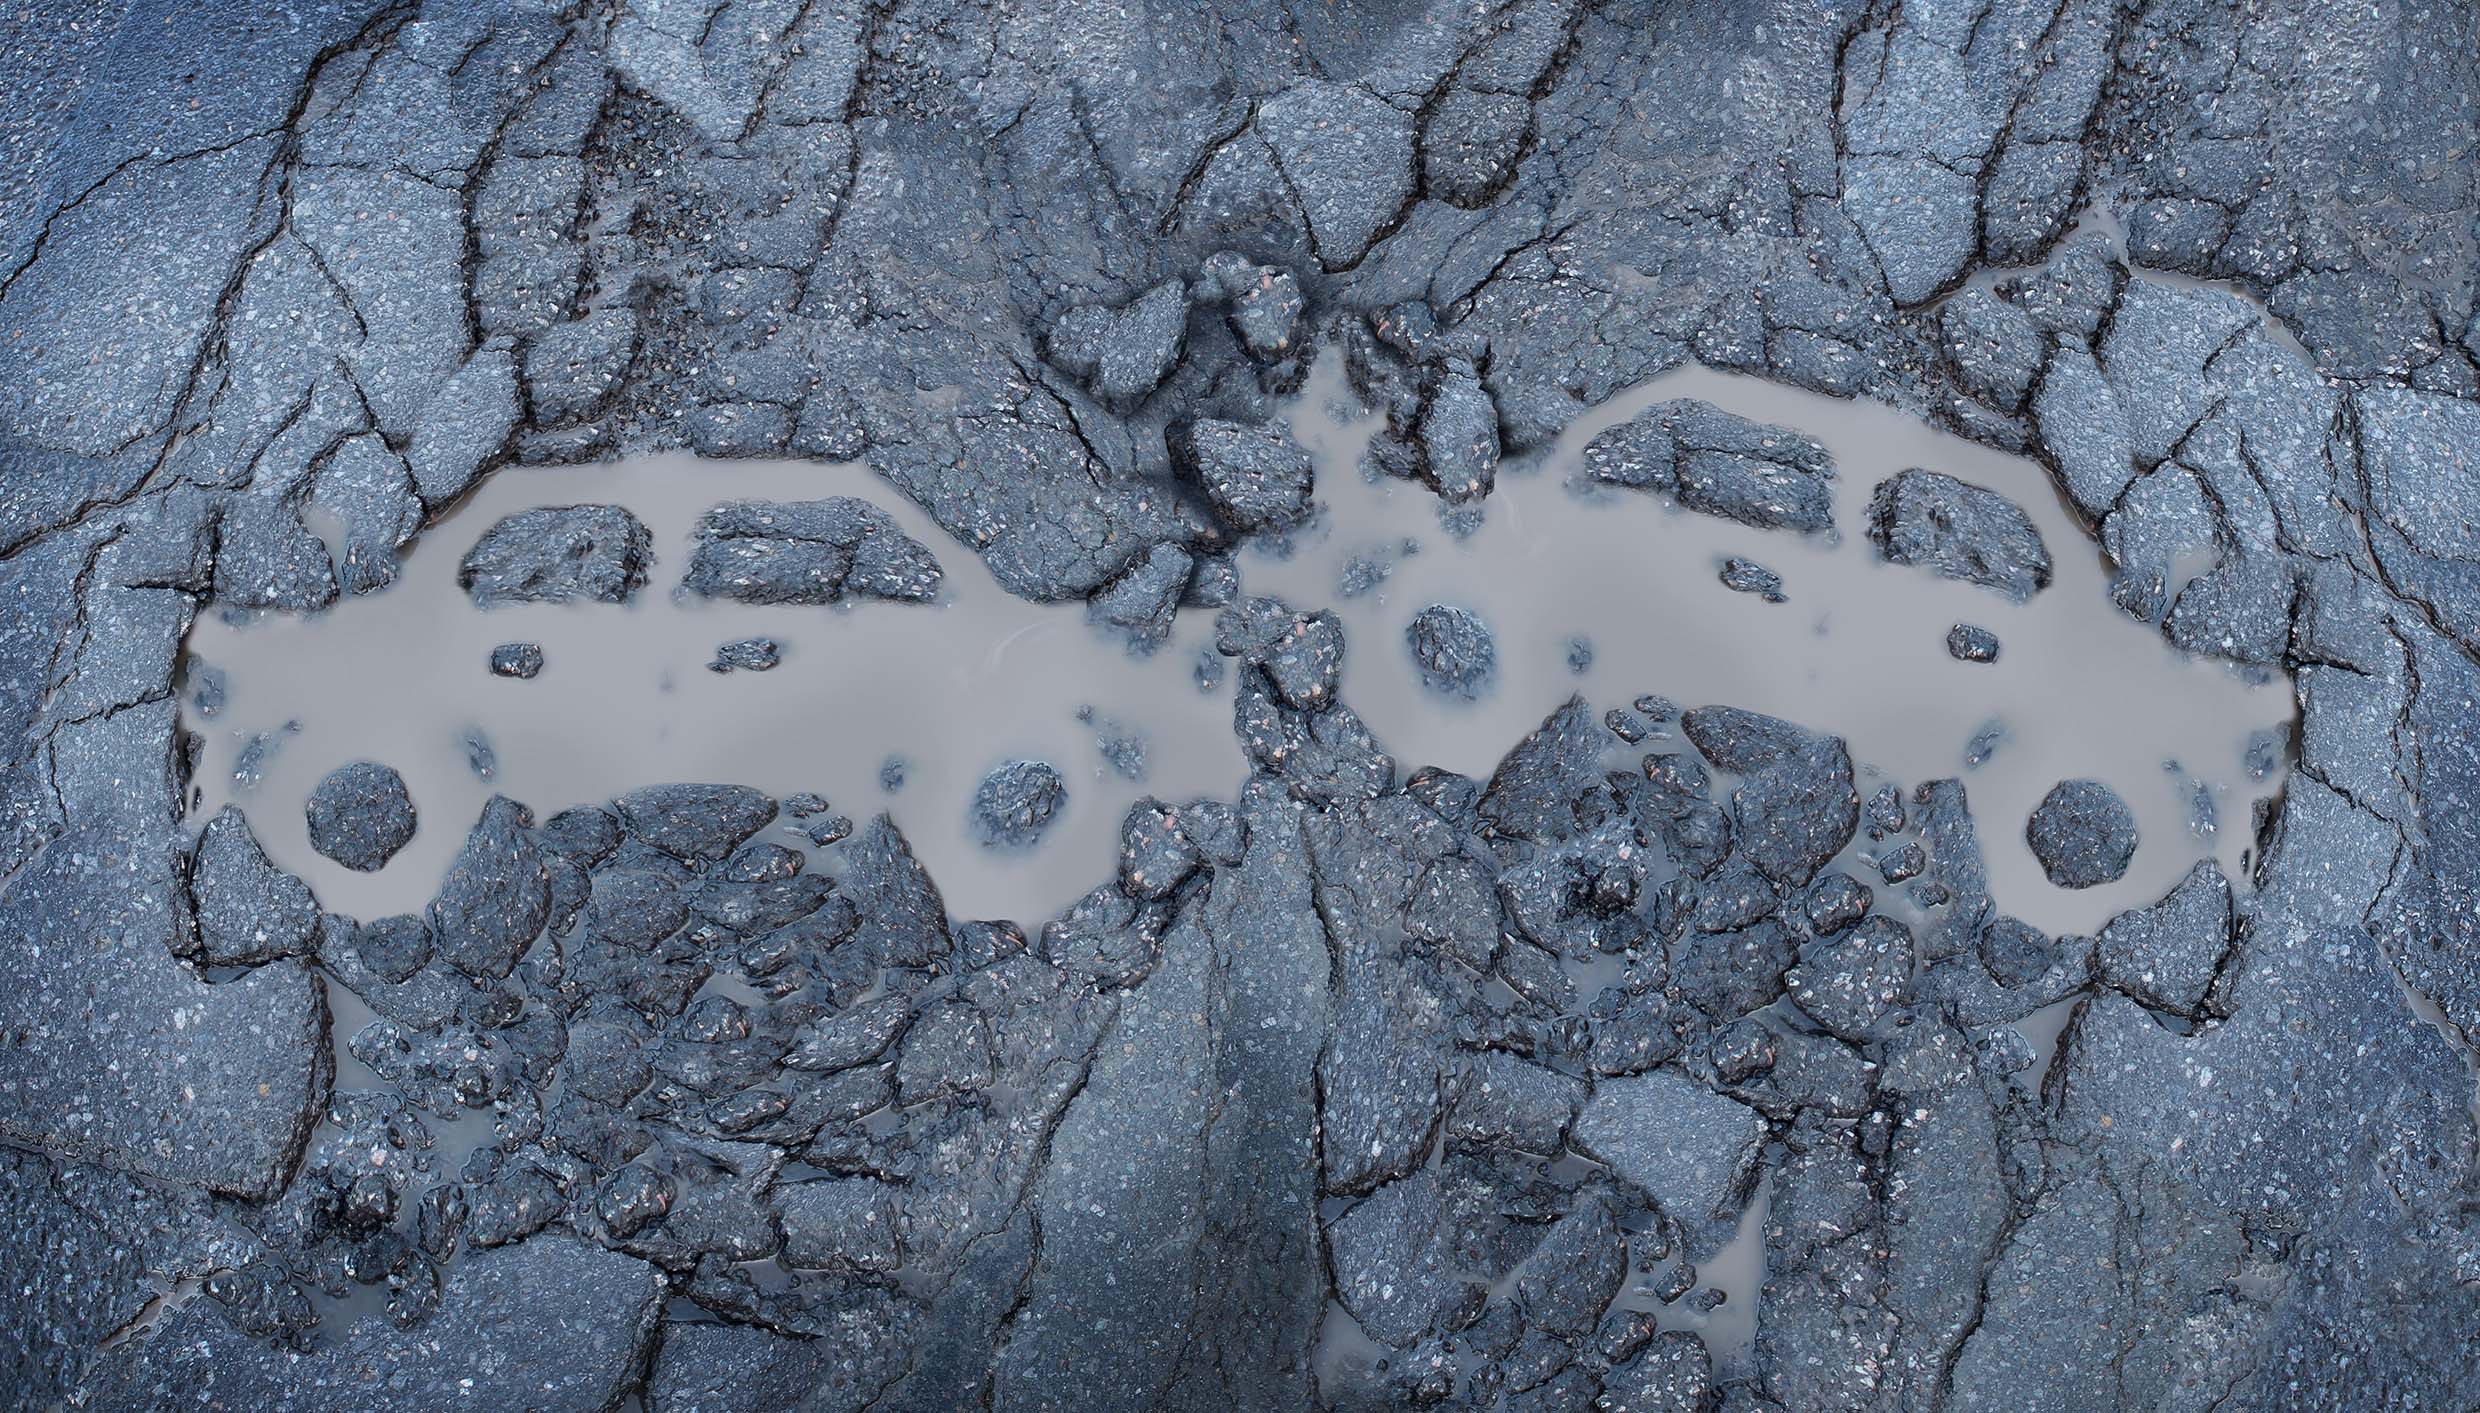 Vannpytter i stein formet som to biler som kræsjer